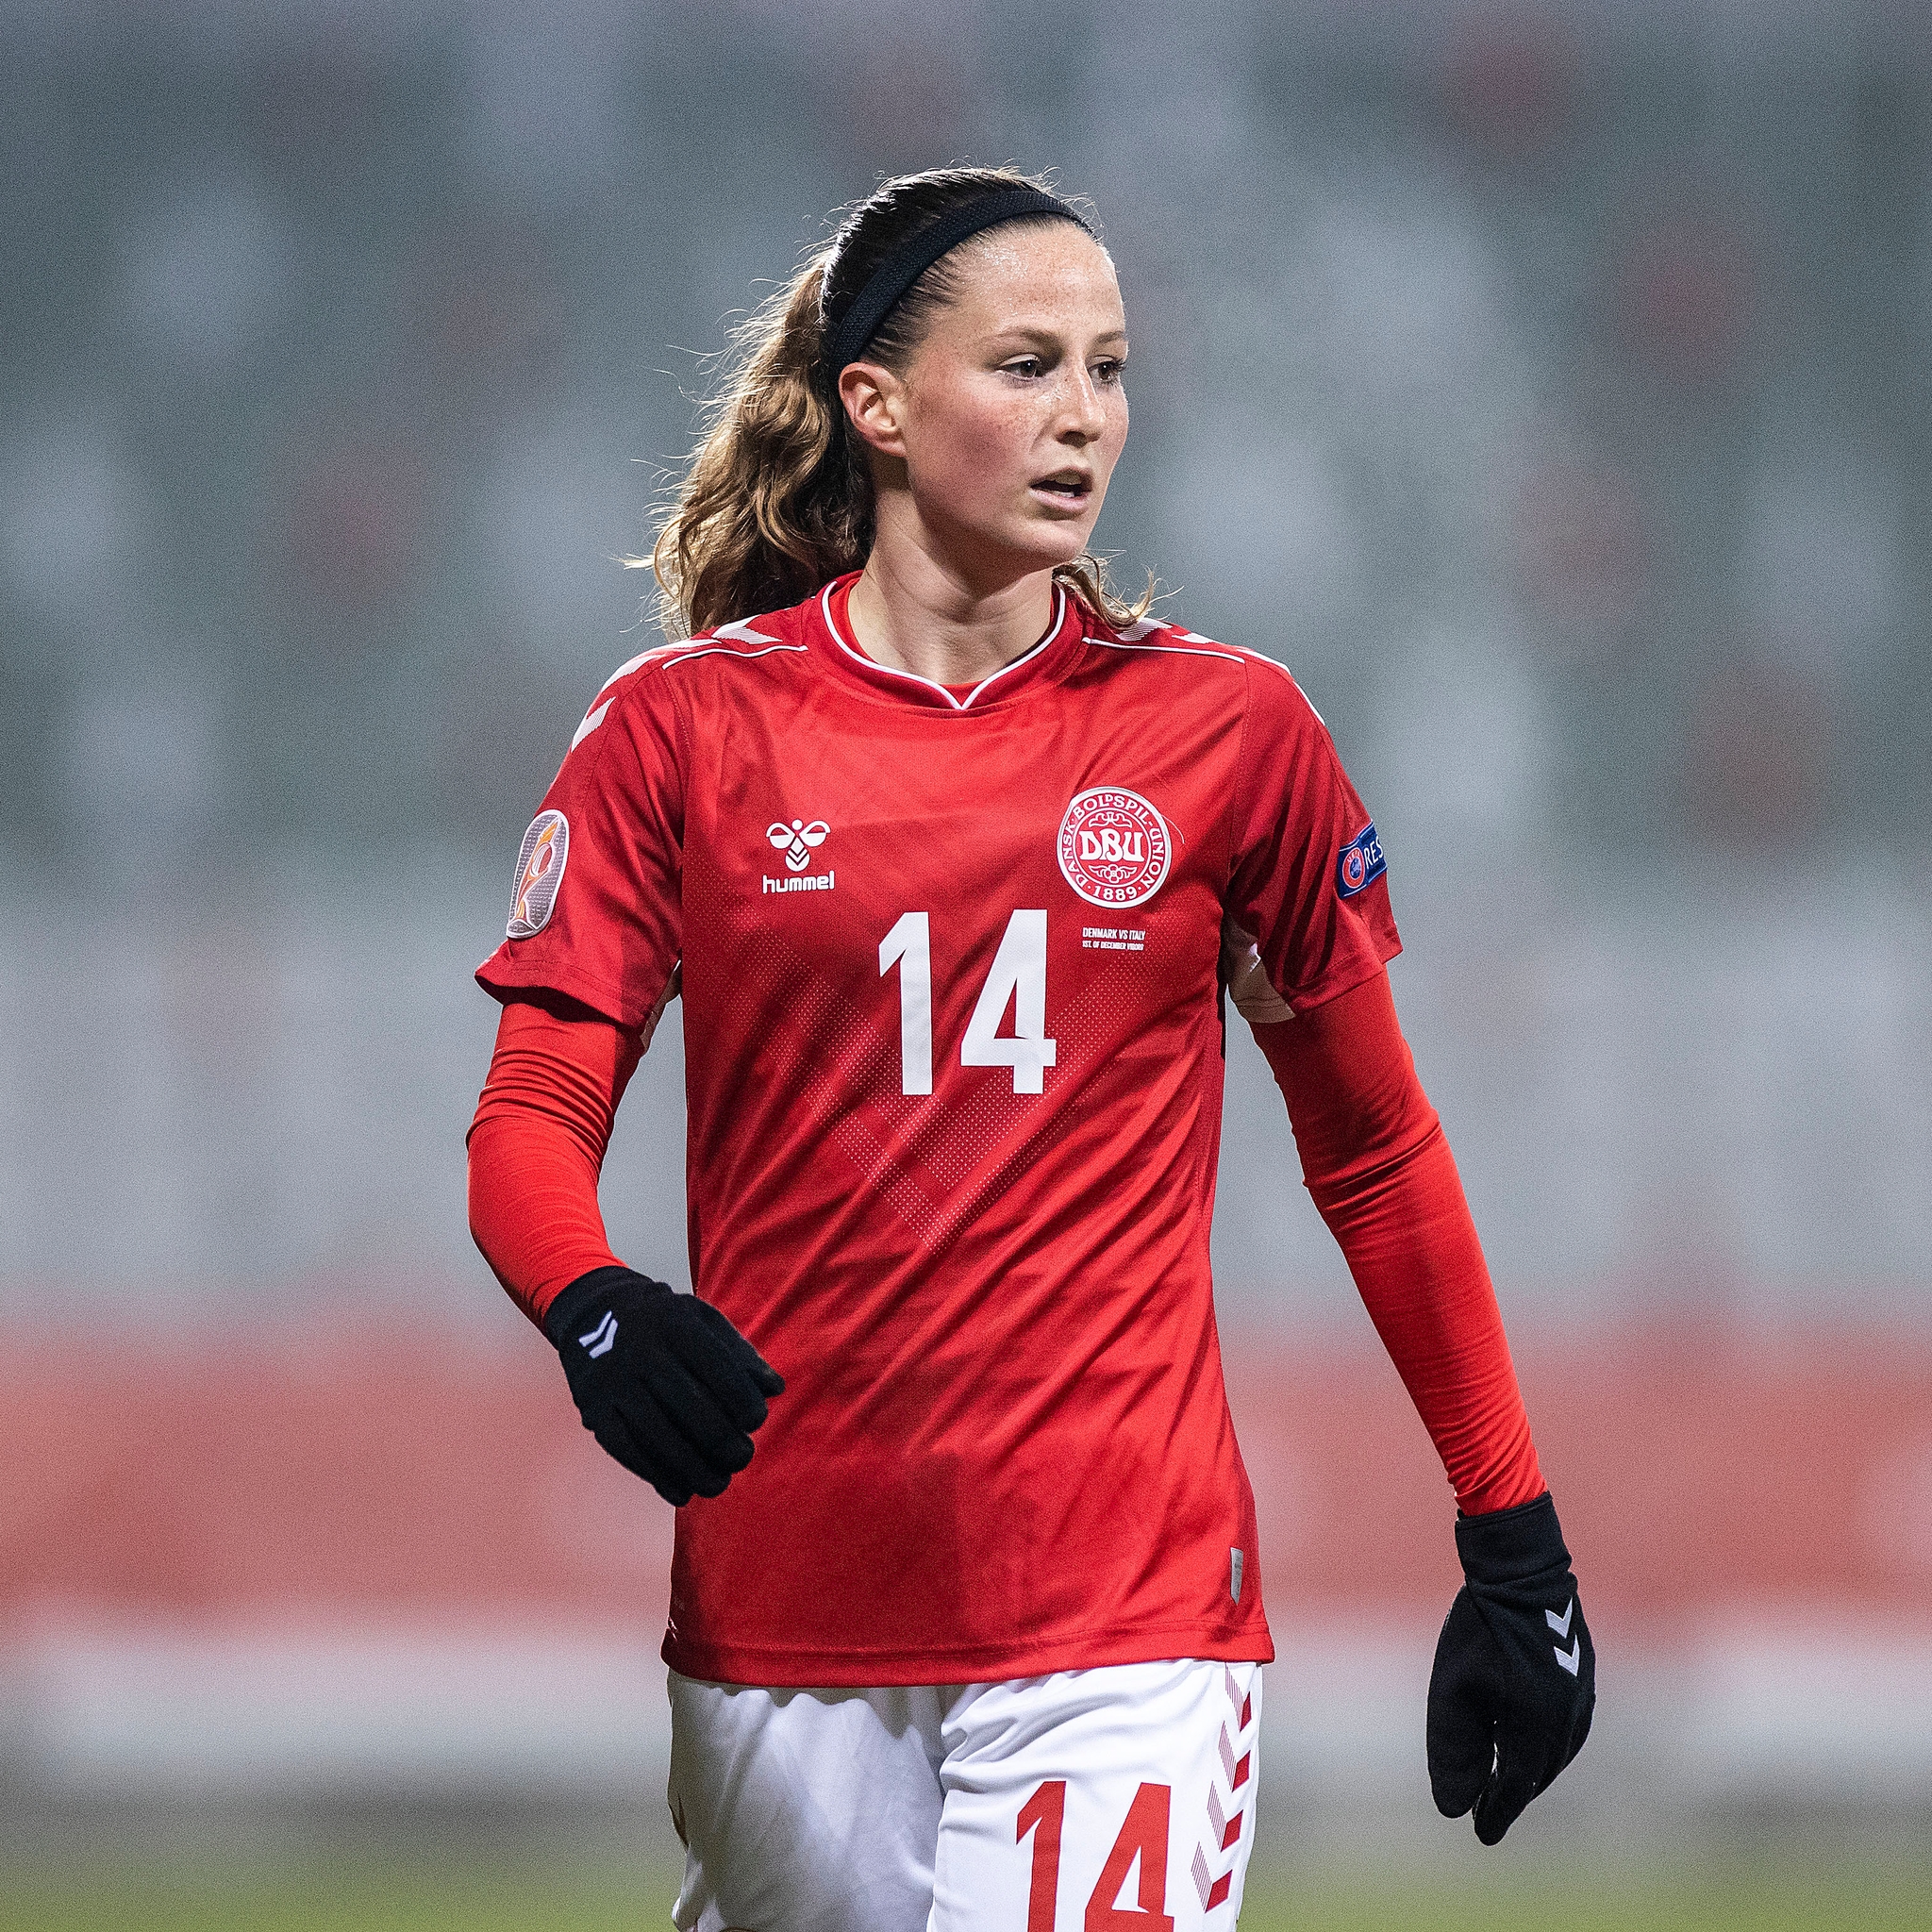 Nicoline Sørensen